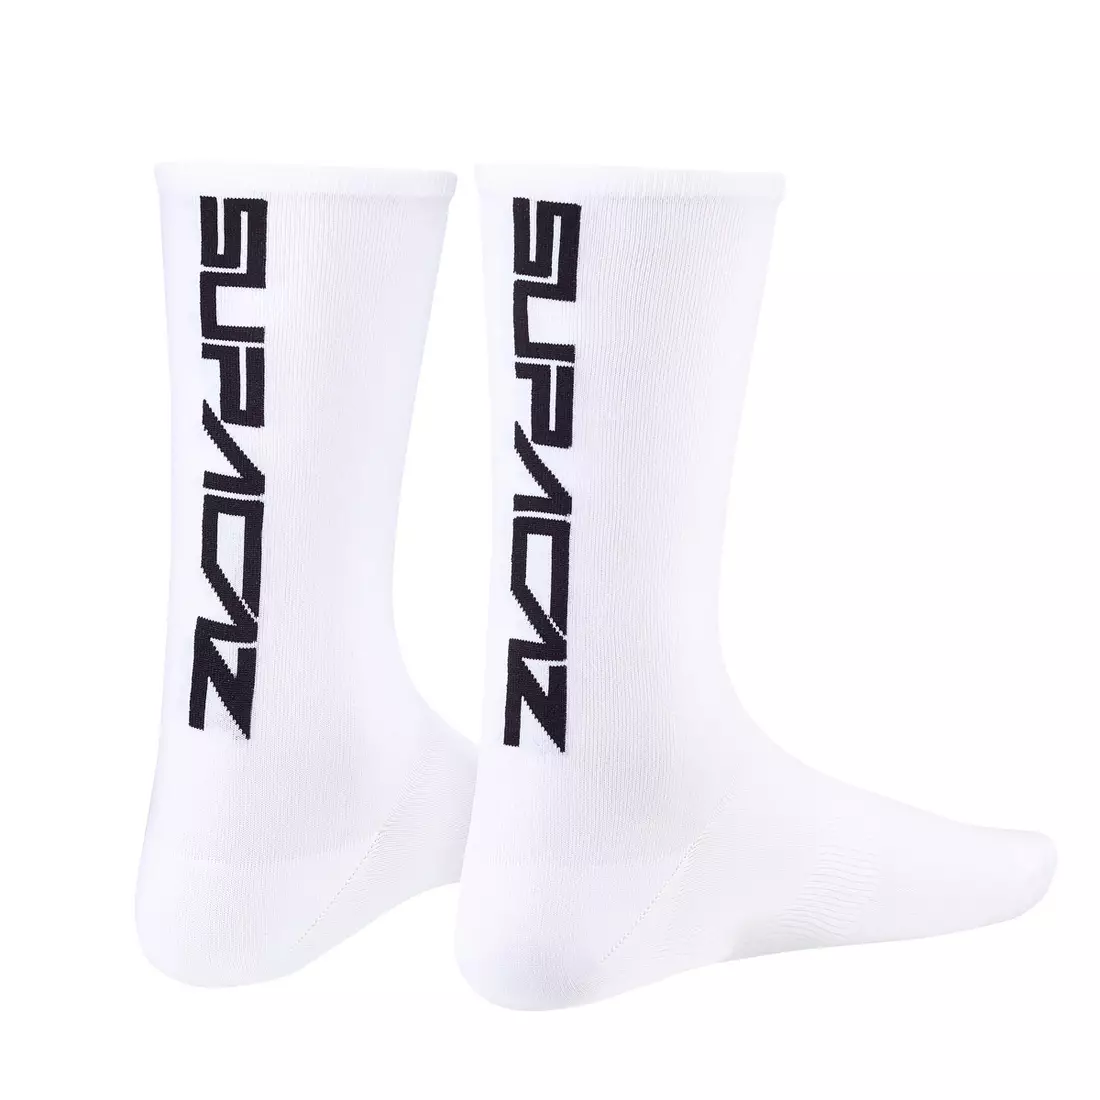 SUPACAZ white and black cycling socks